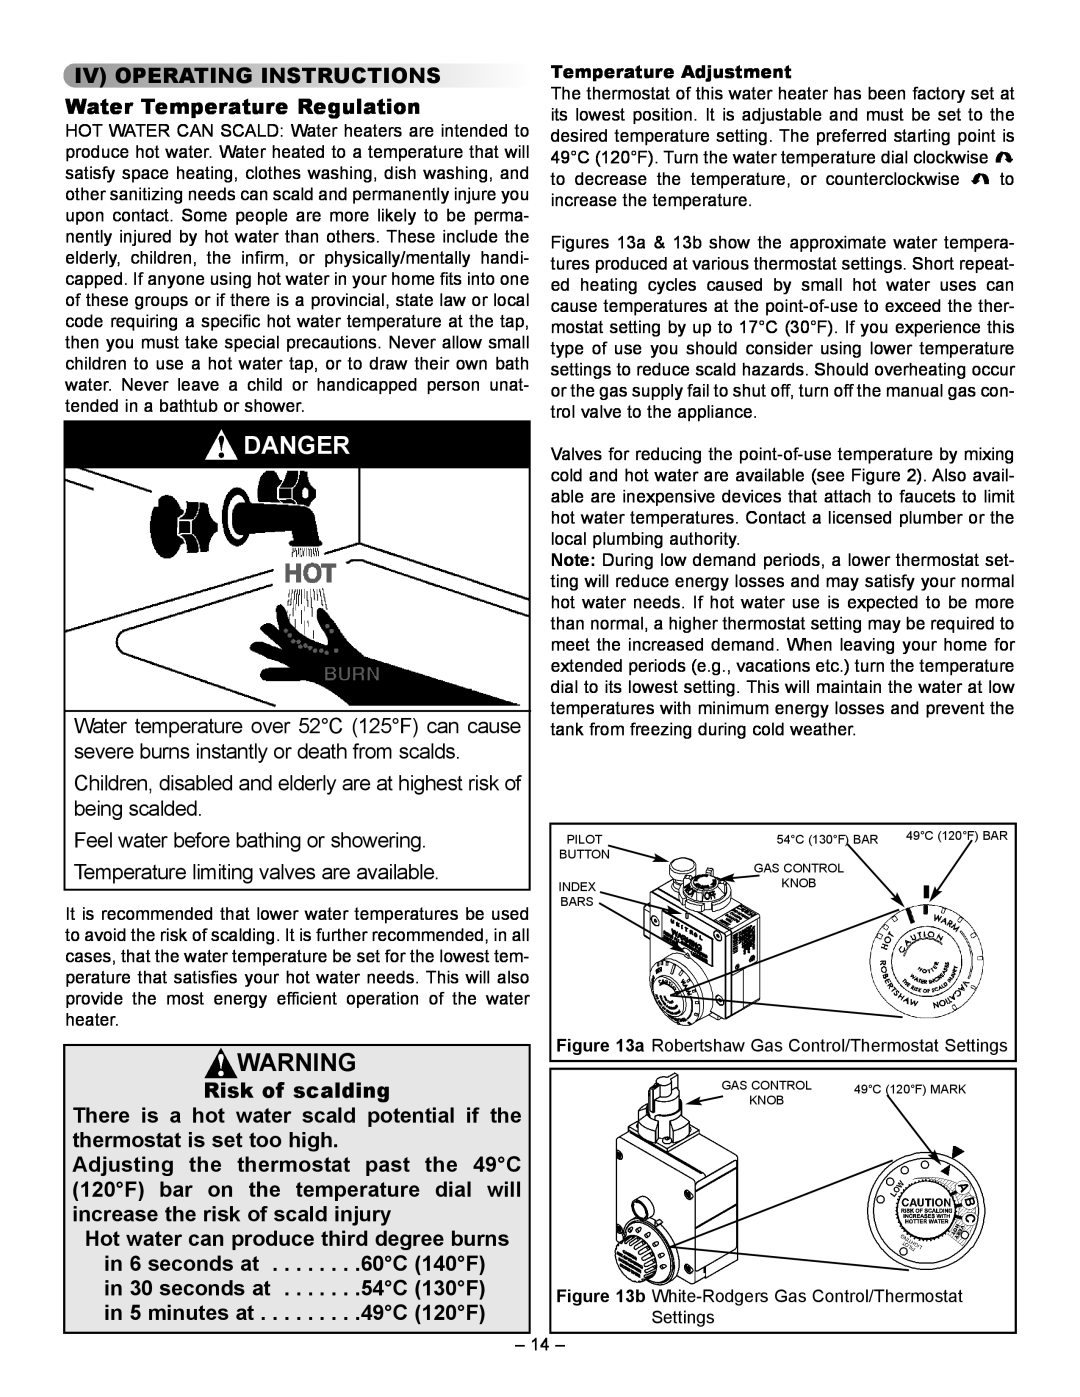 GSW 72090 manual Risk of scalding, Danger 